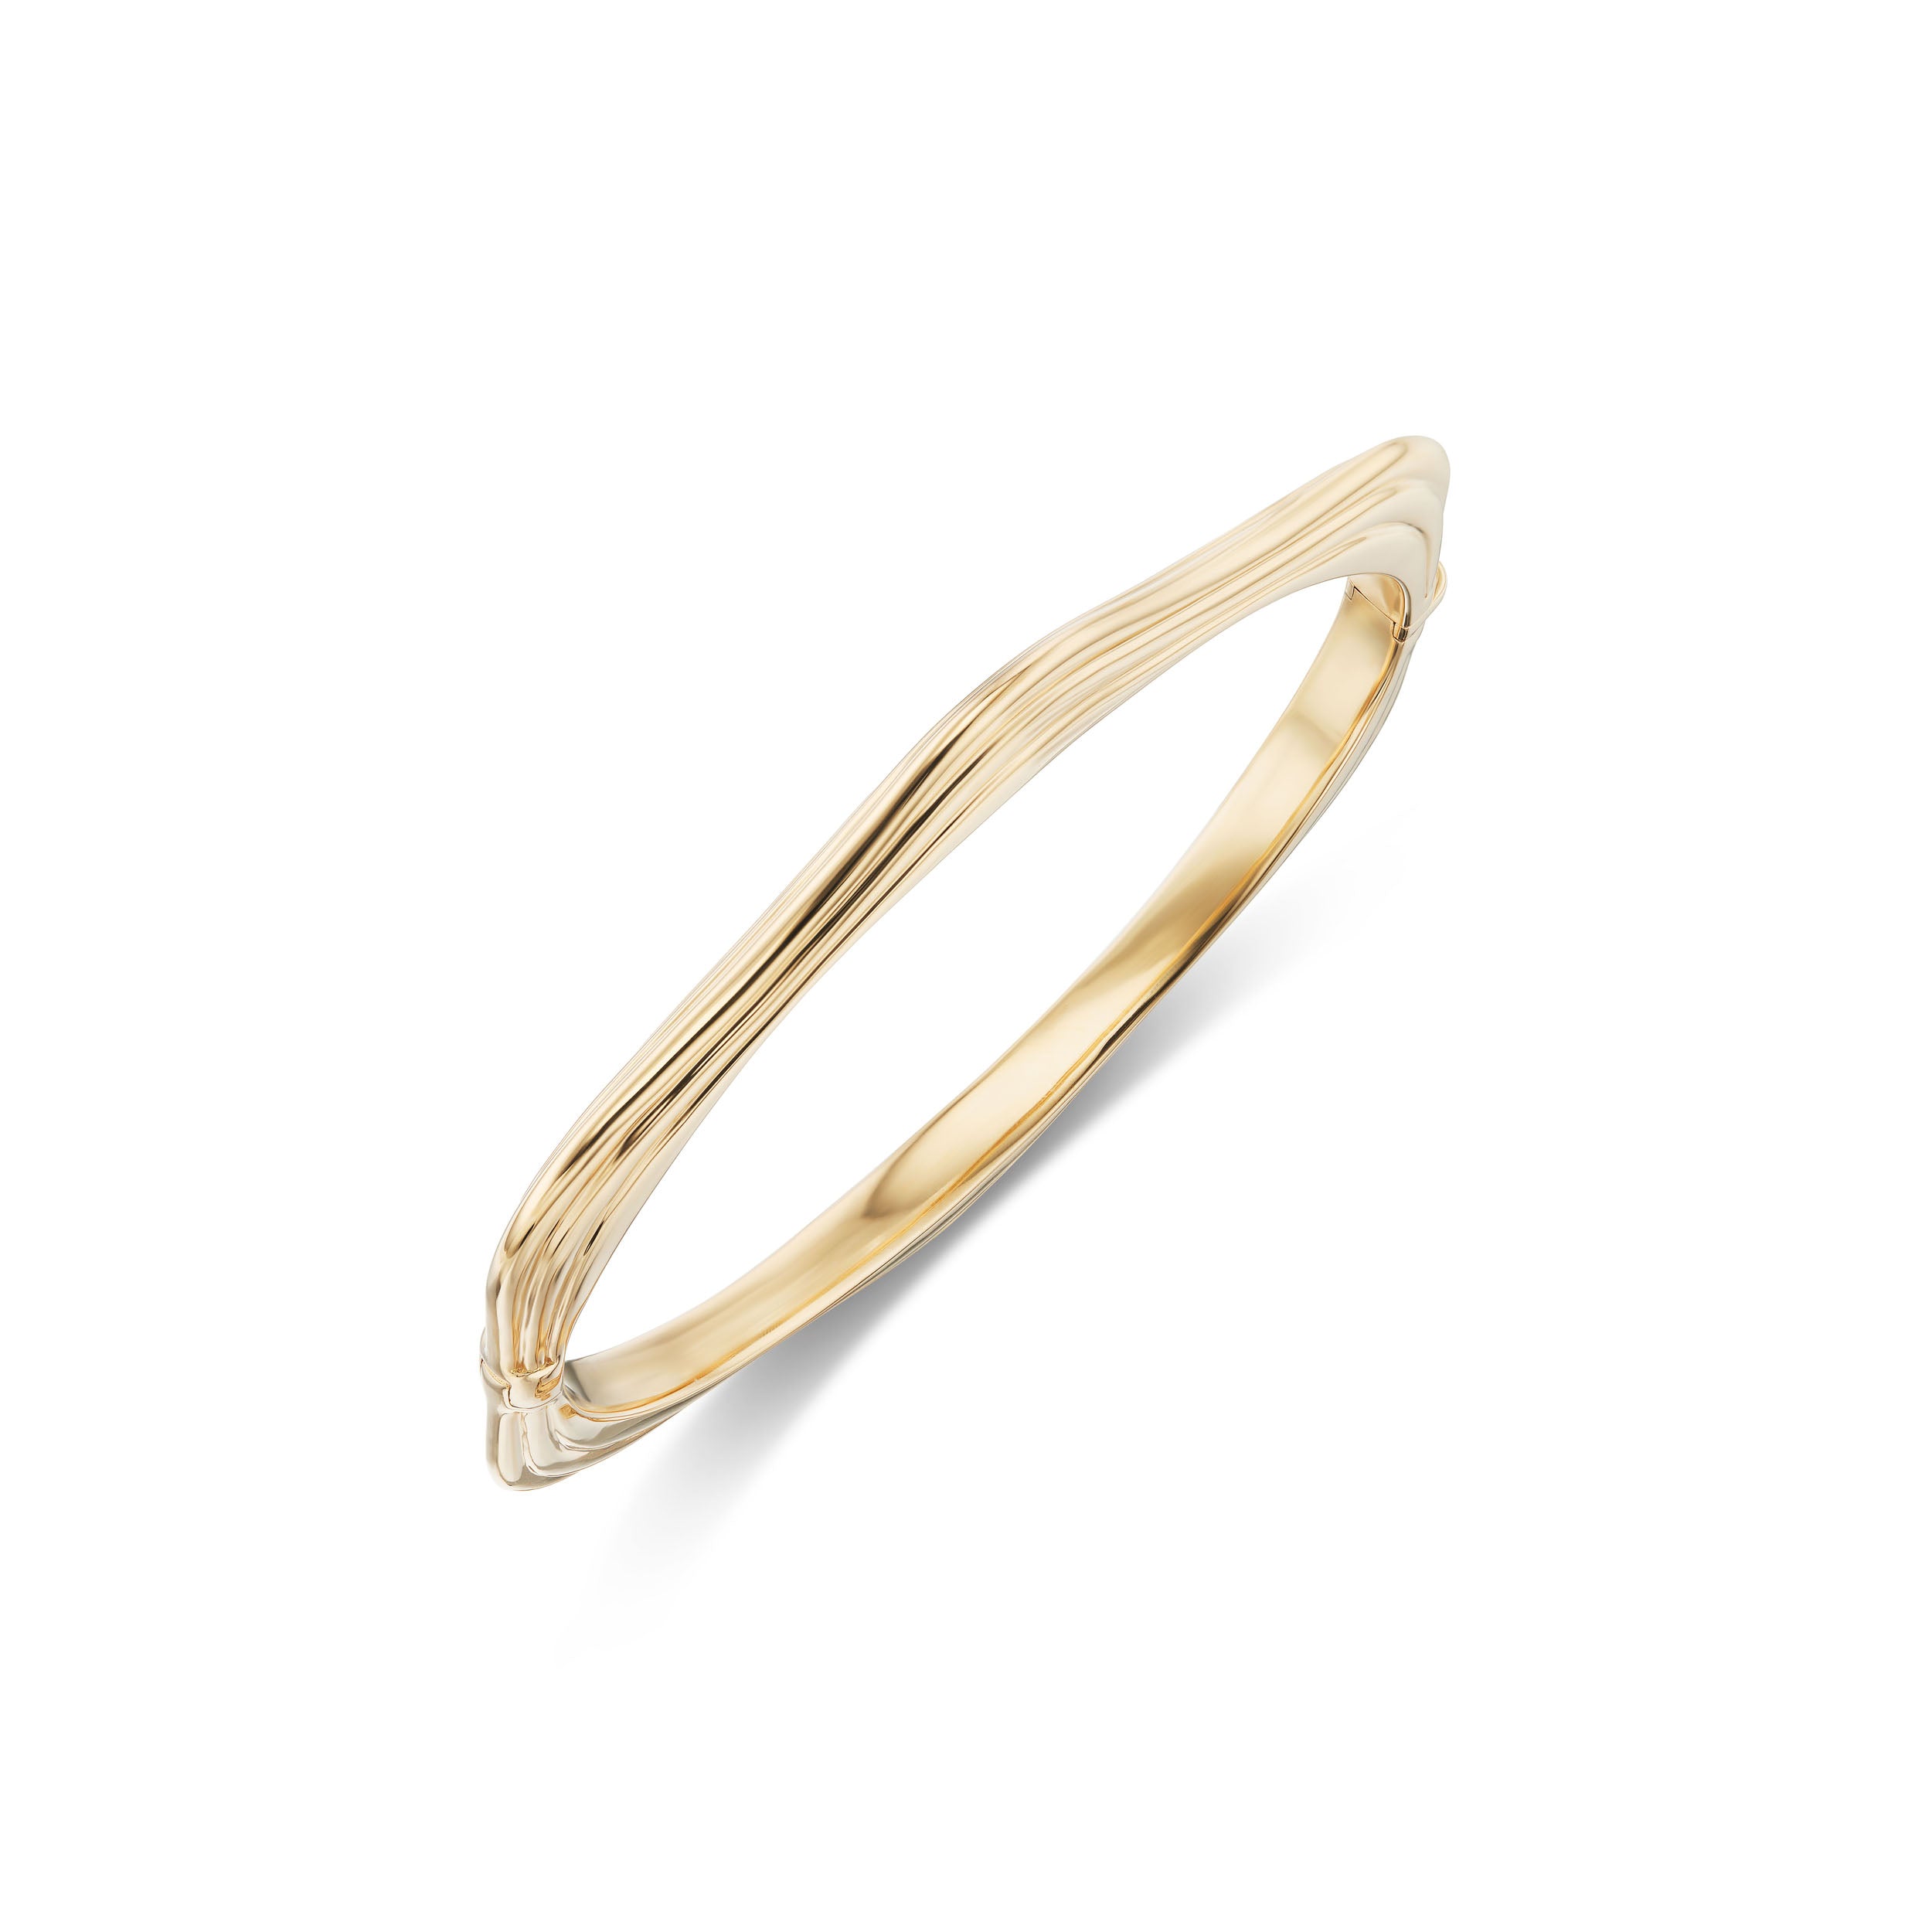 Gold Cuff Bracelet - Monroe